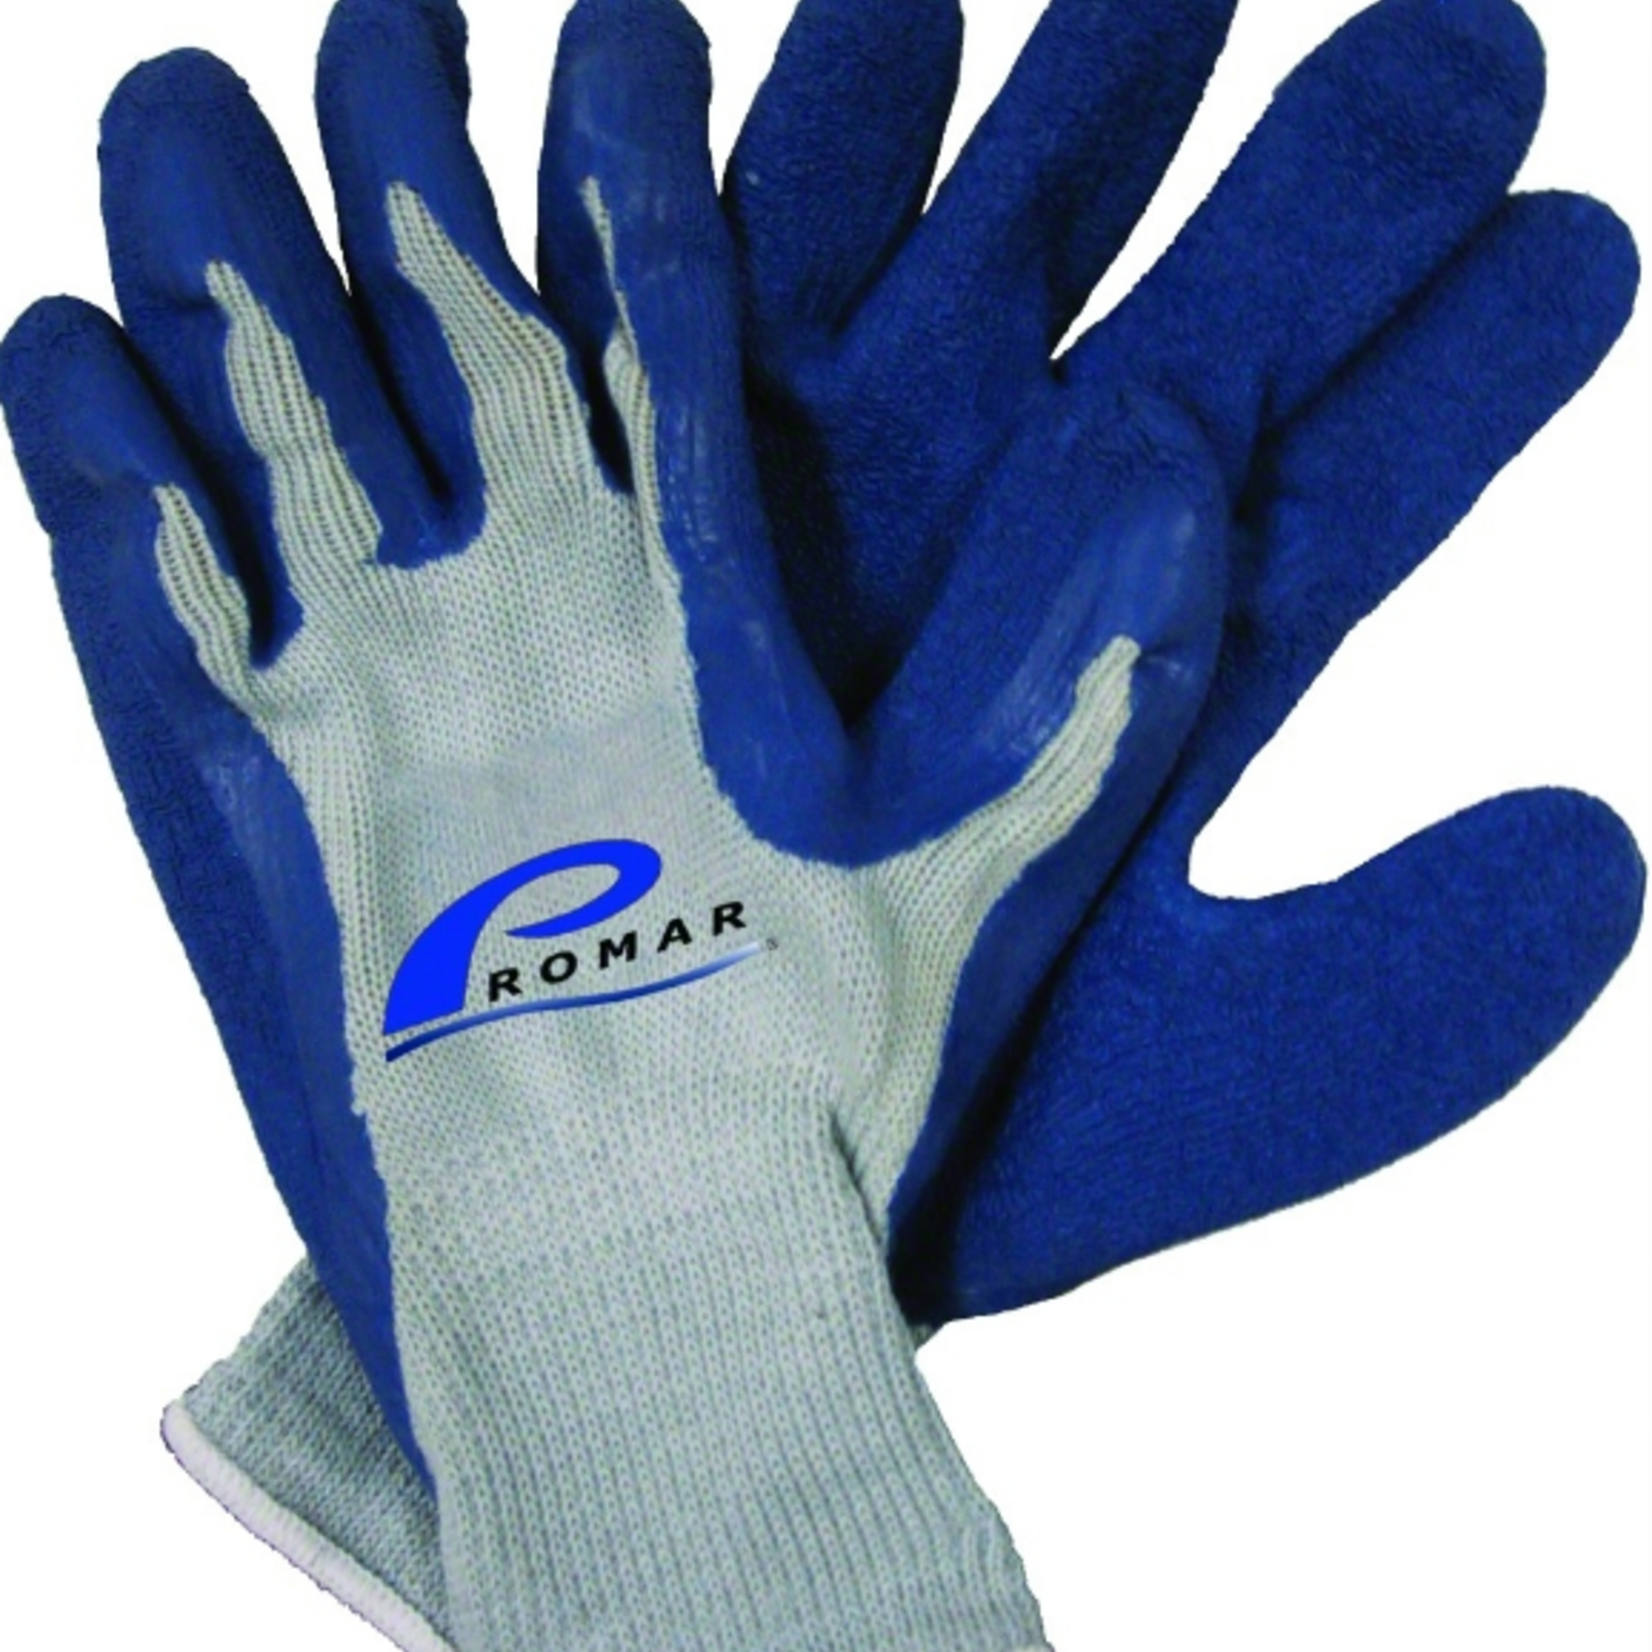 Promar Latex Gloves